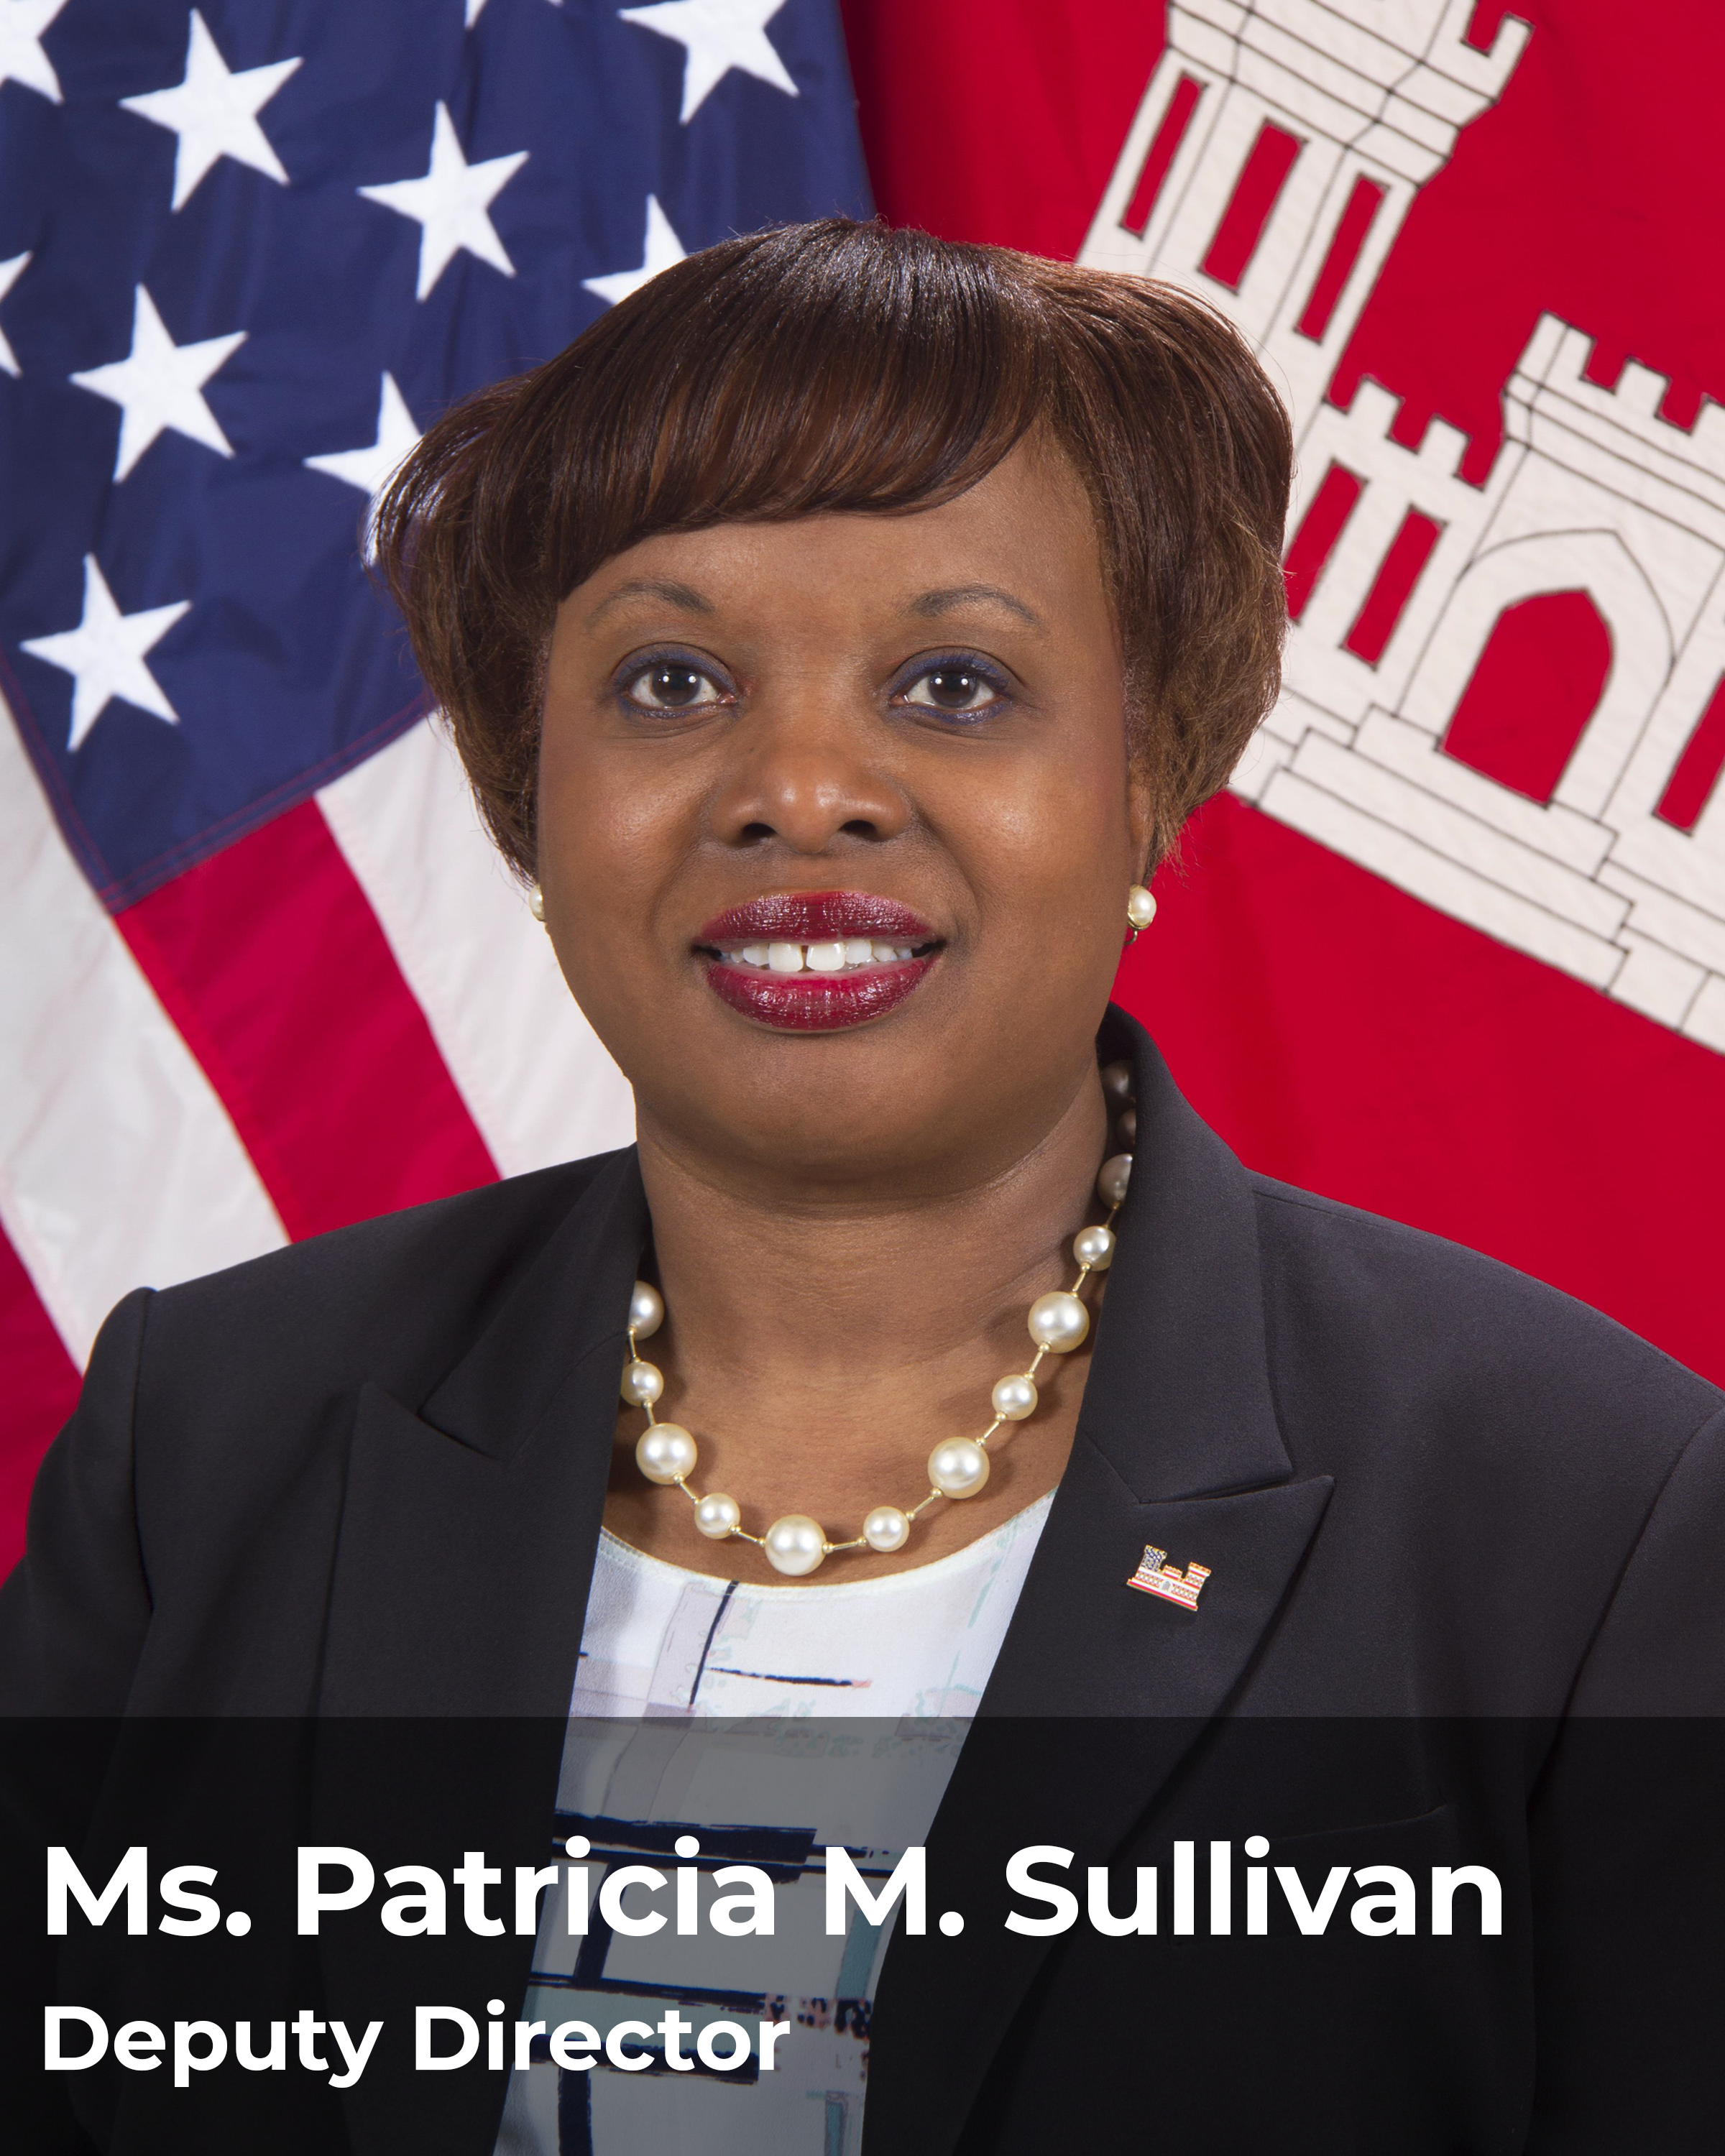 Ms. Patricia Sullivan, Deputy Director